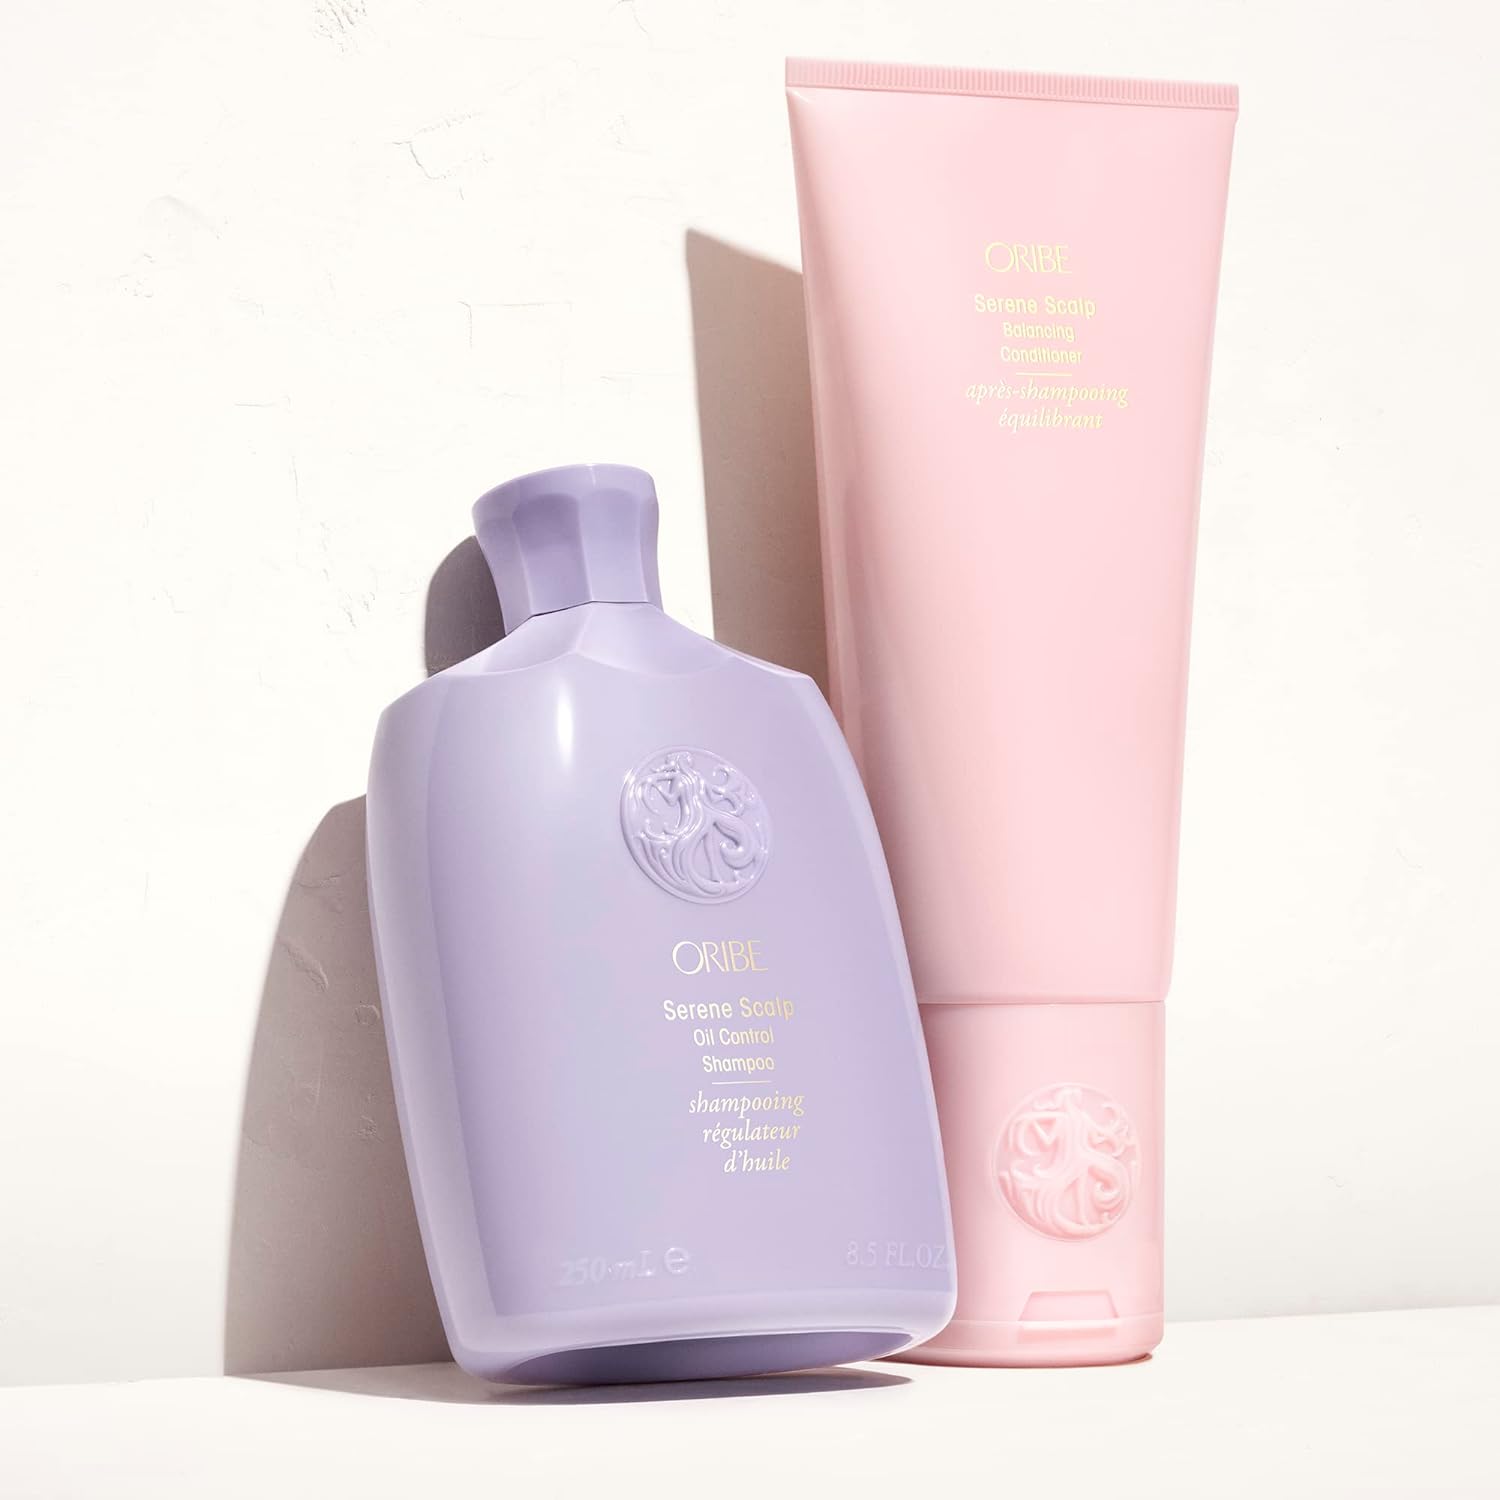 Oribe Serene Scalp Oil Control Shampoo : Beauty & Personal Care